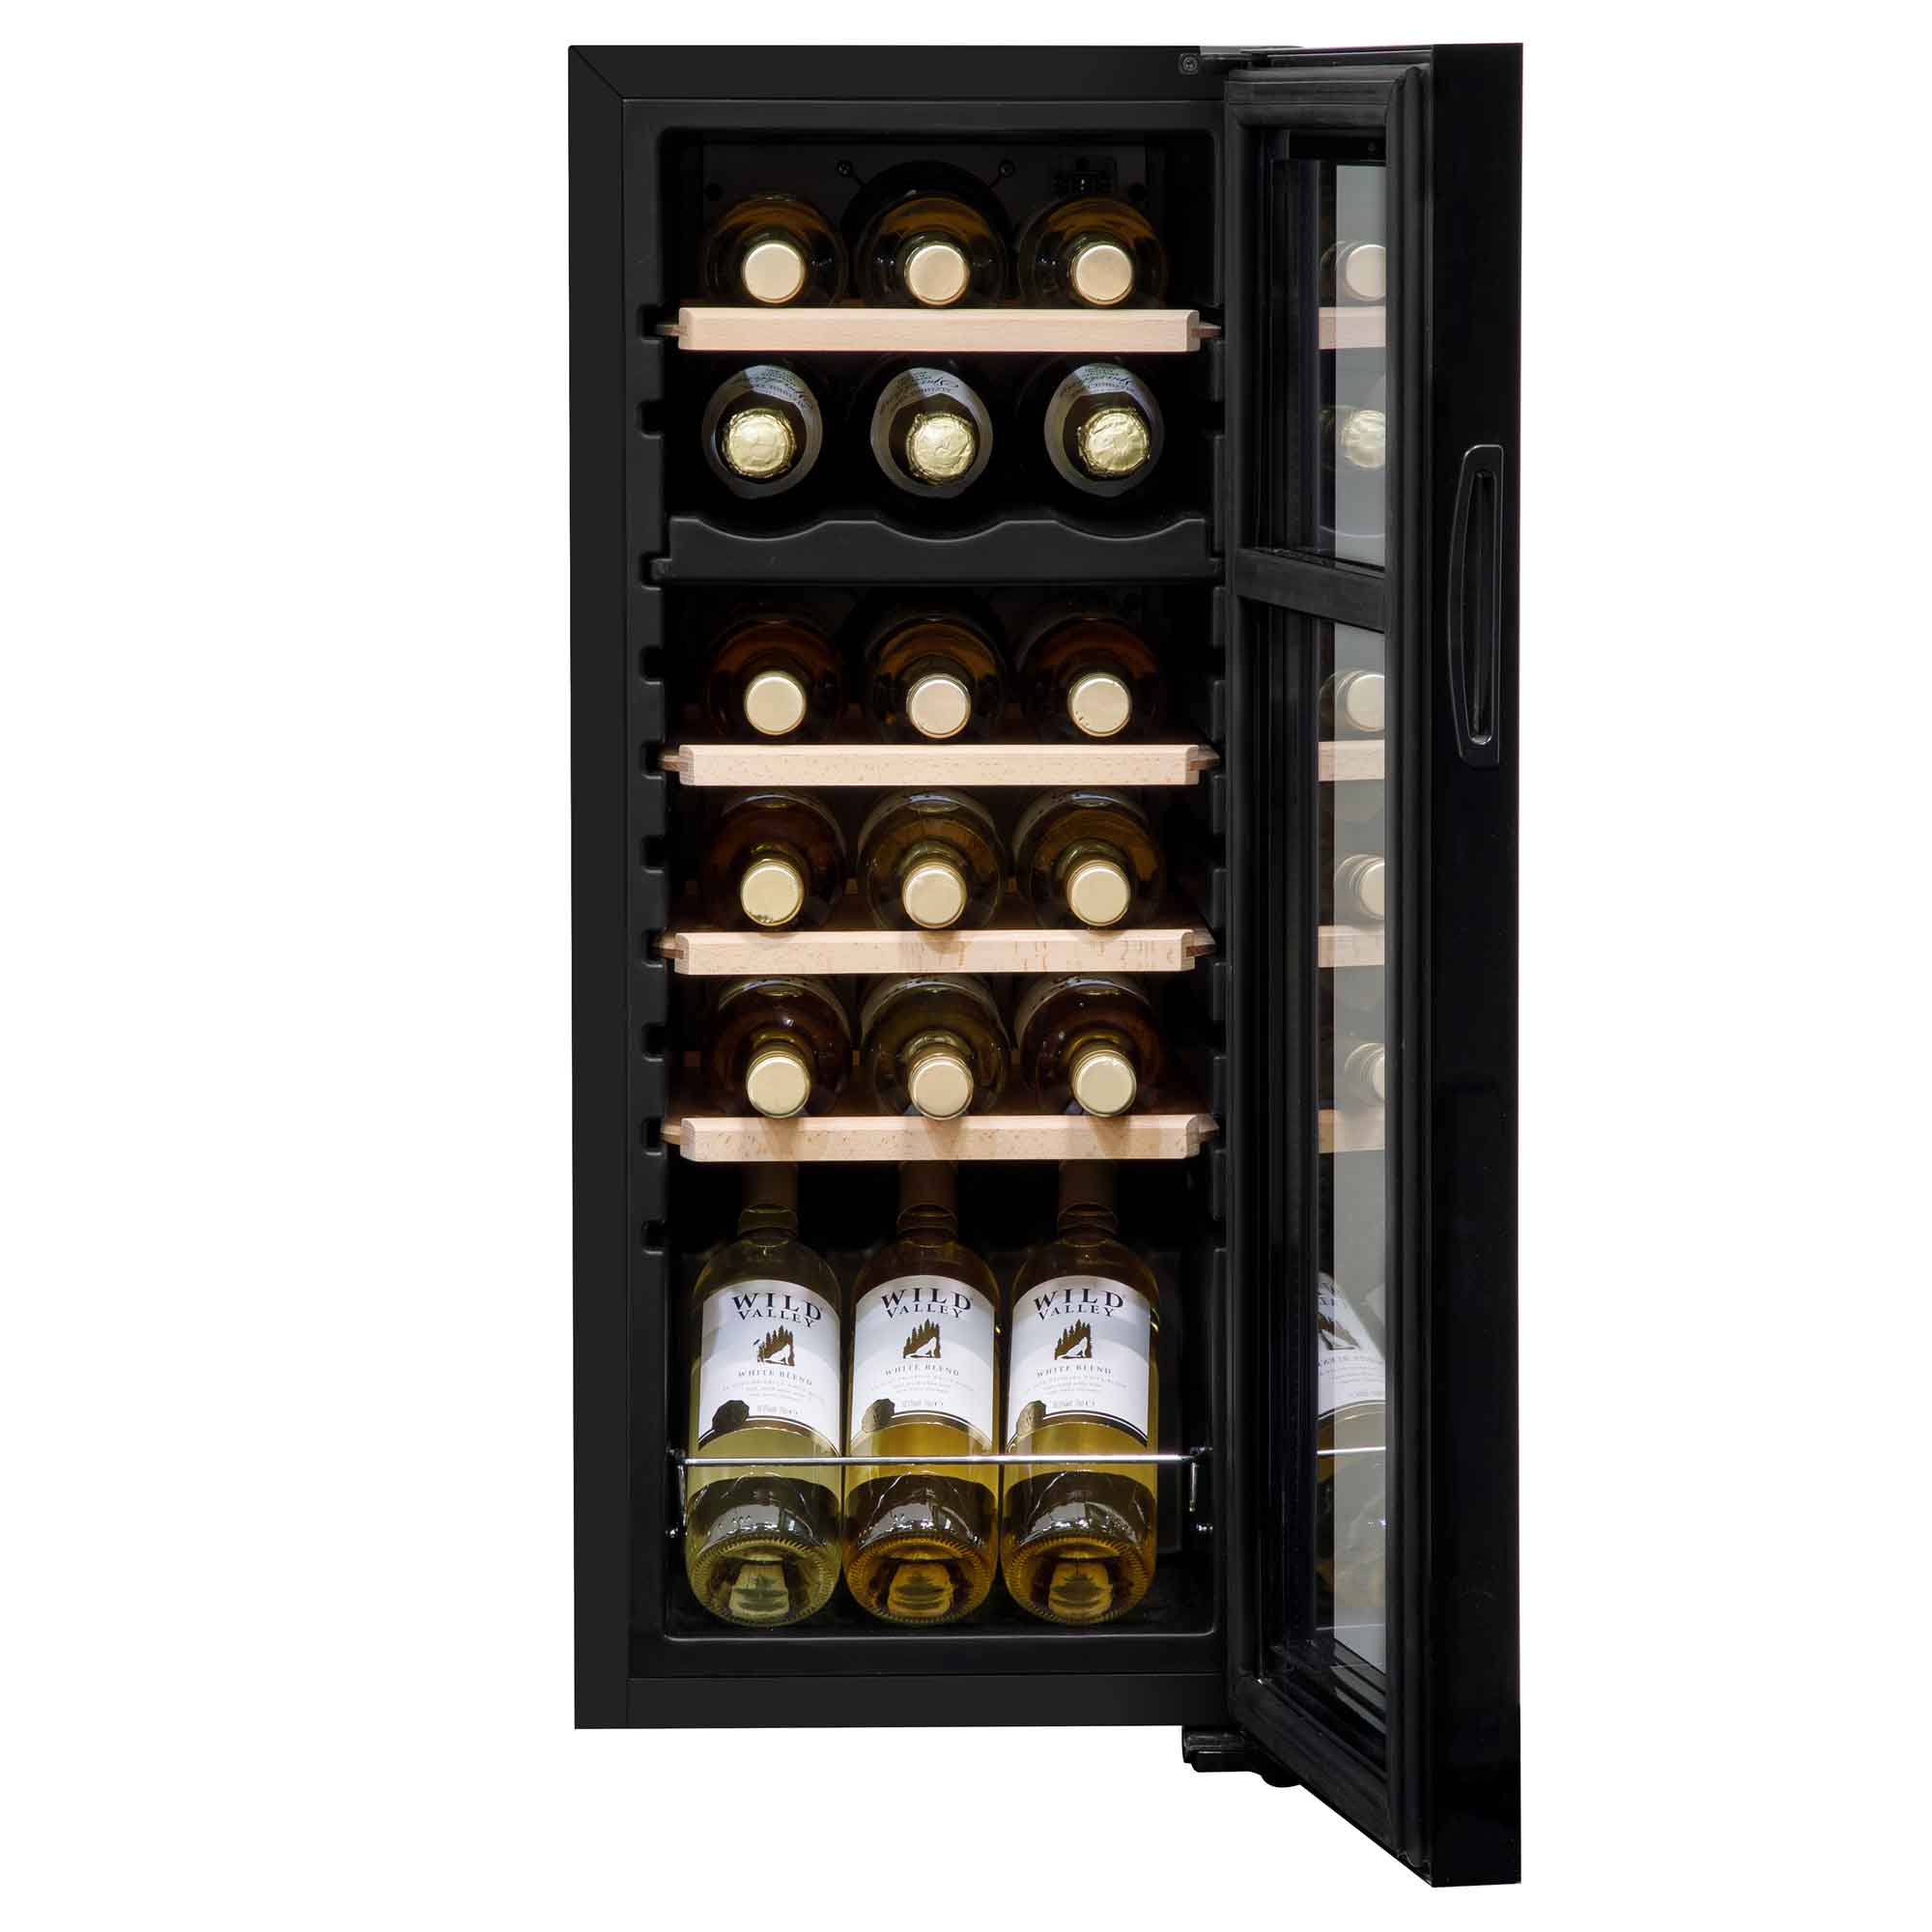 Baridi 18 Bottle Dual Zone Wine Cooler, Fridge, Touch Screen Controls, Wooden Shelves, LED - Black - DH89  Dellonda   